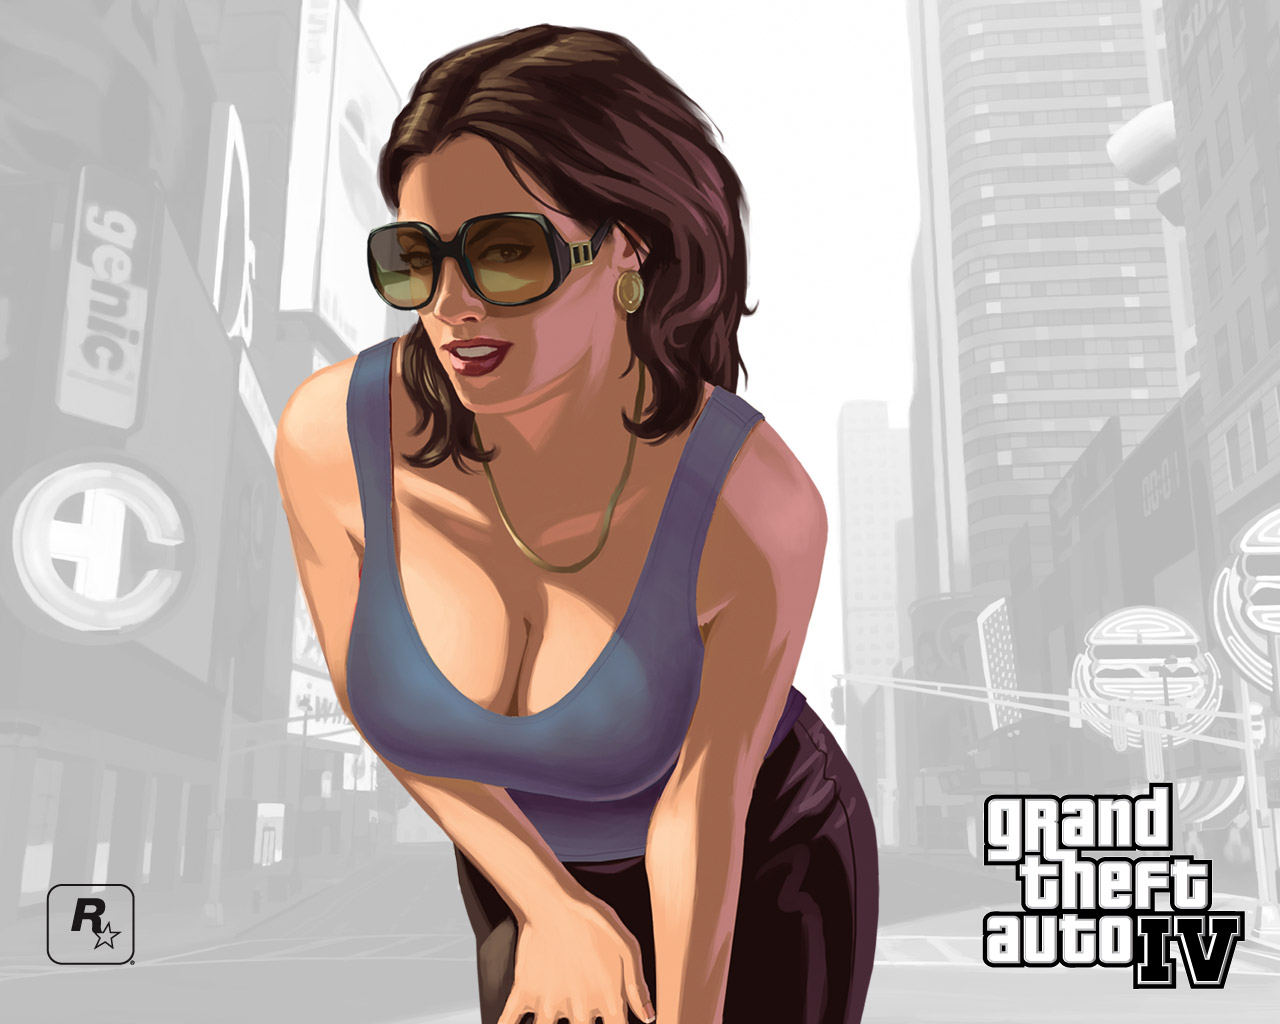 Grand Theft Auto IV Art